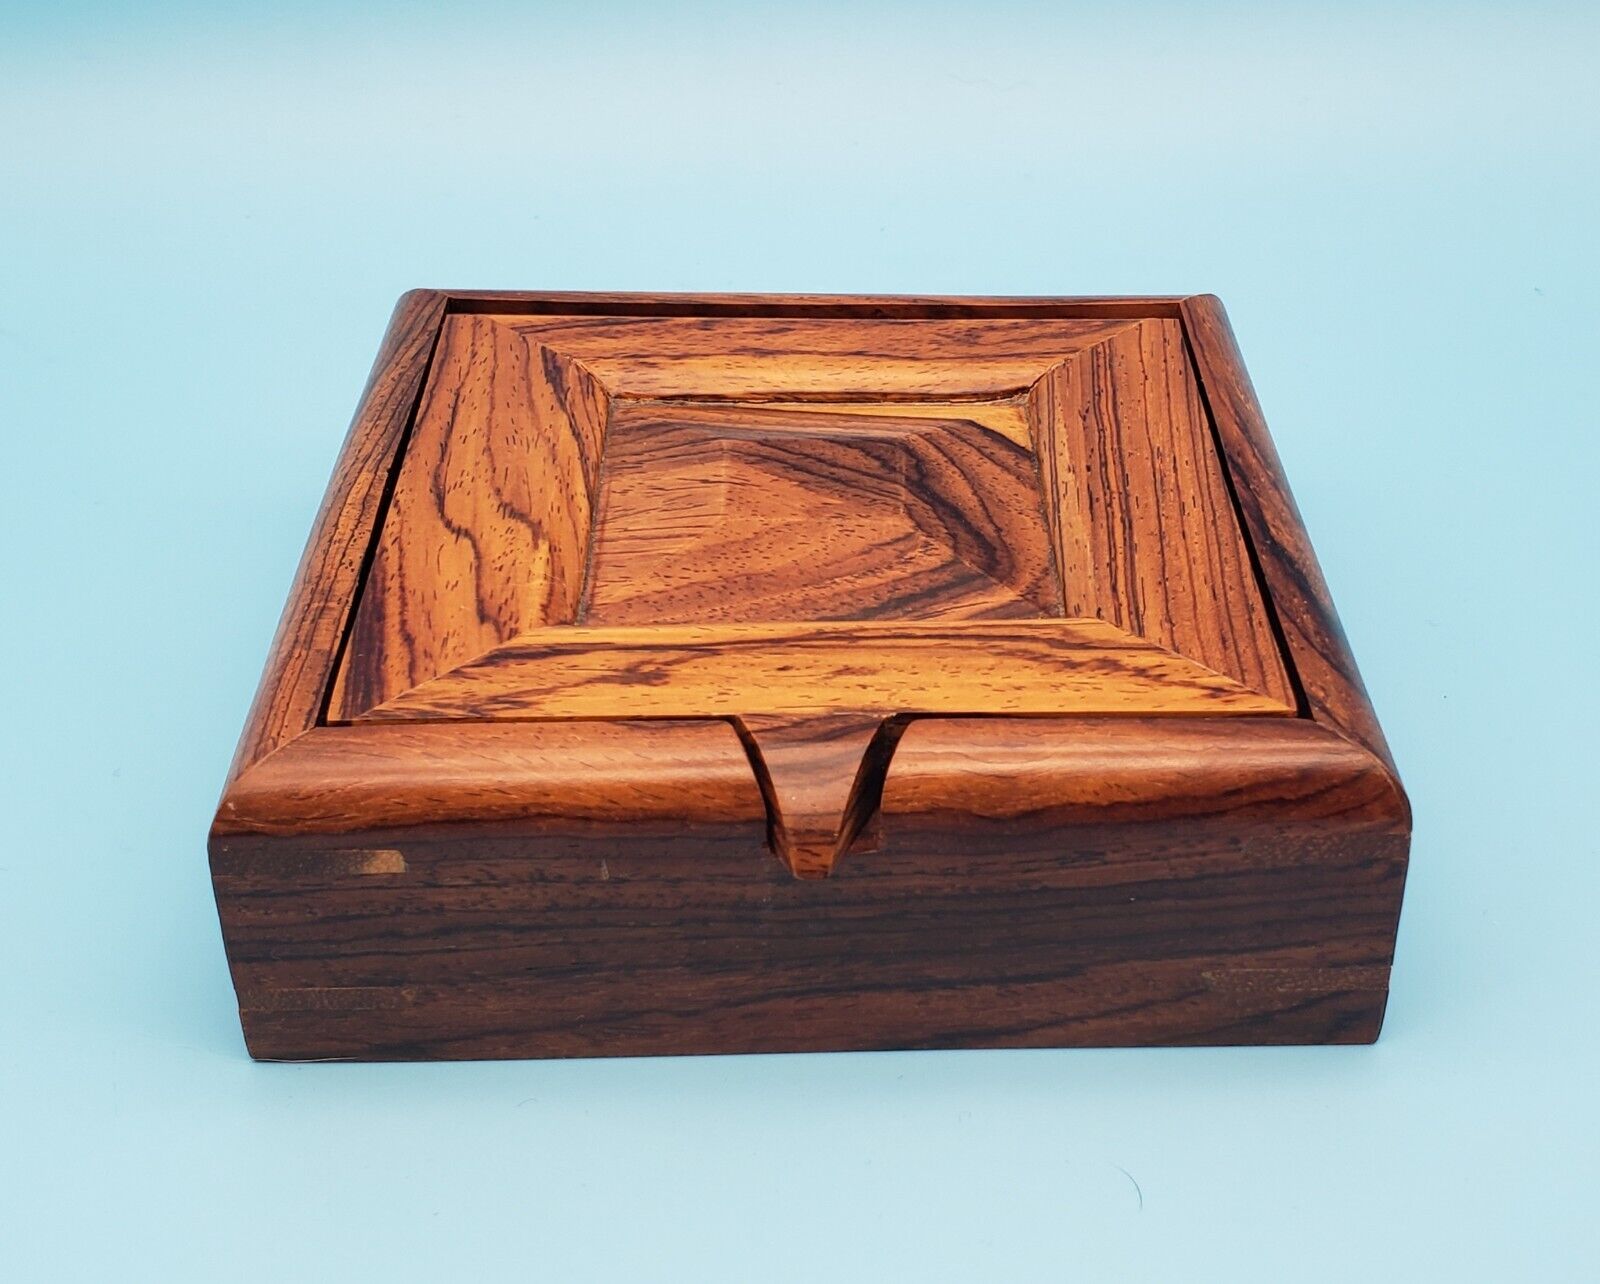 Beautiful small wood jewelry box,hand crafted in Srilanka,gift,handmade,polished